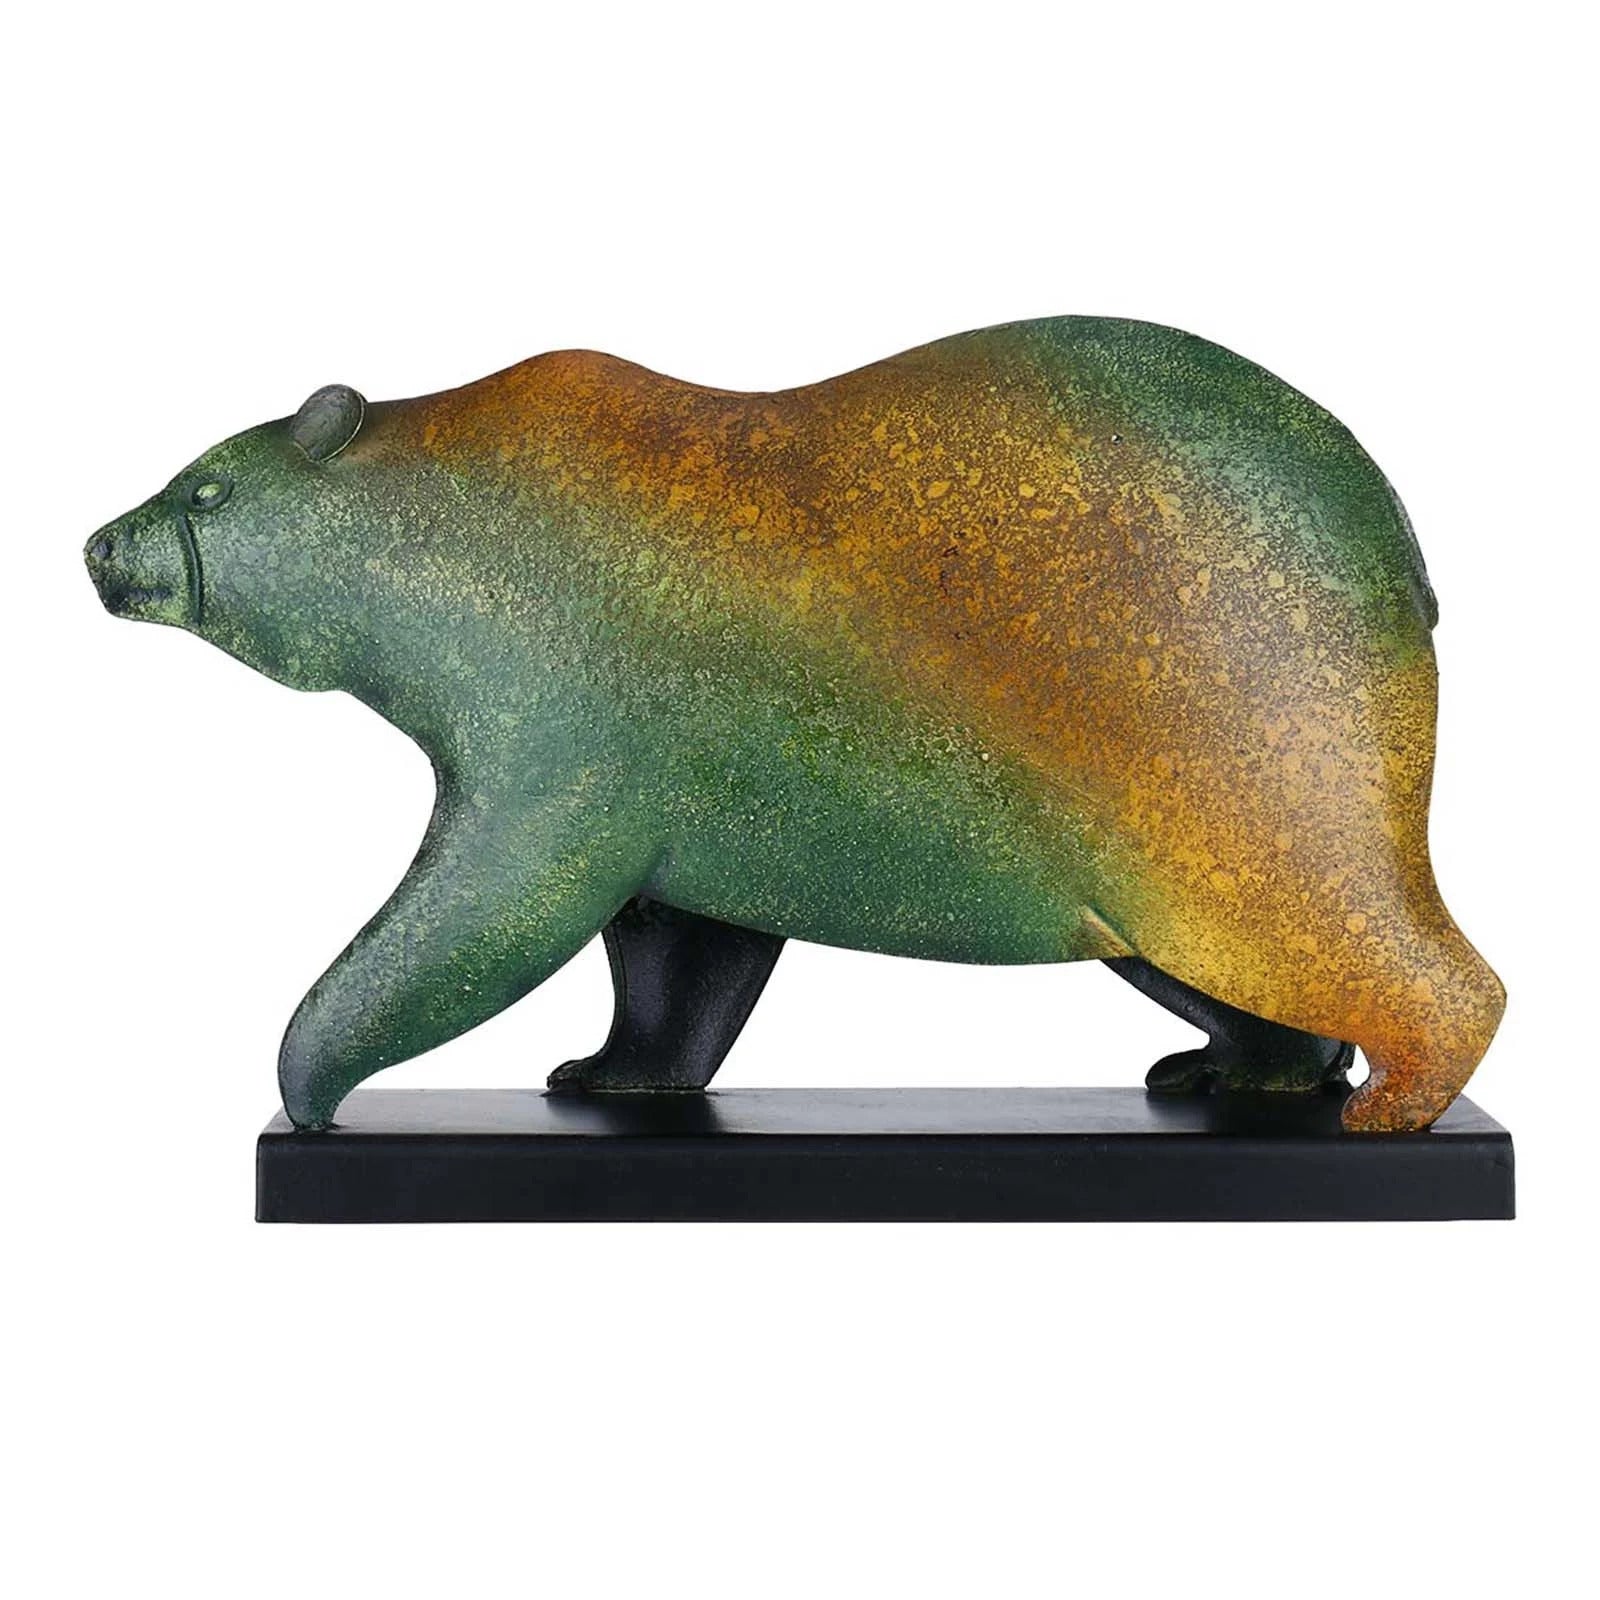 Bear Decor and Figurines